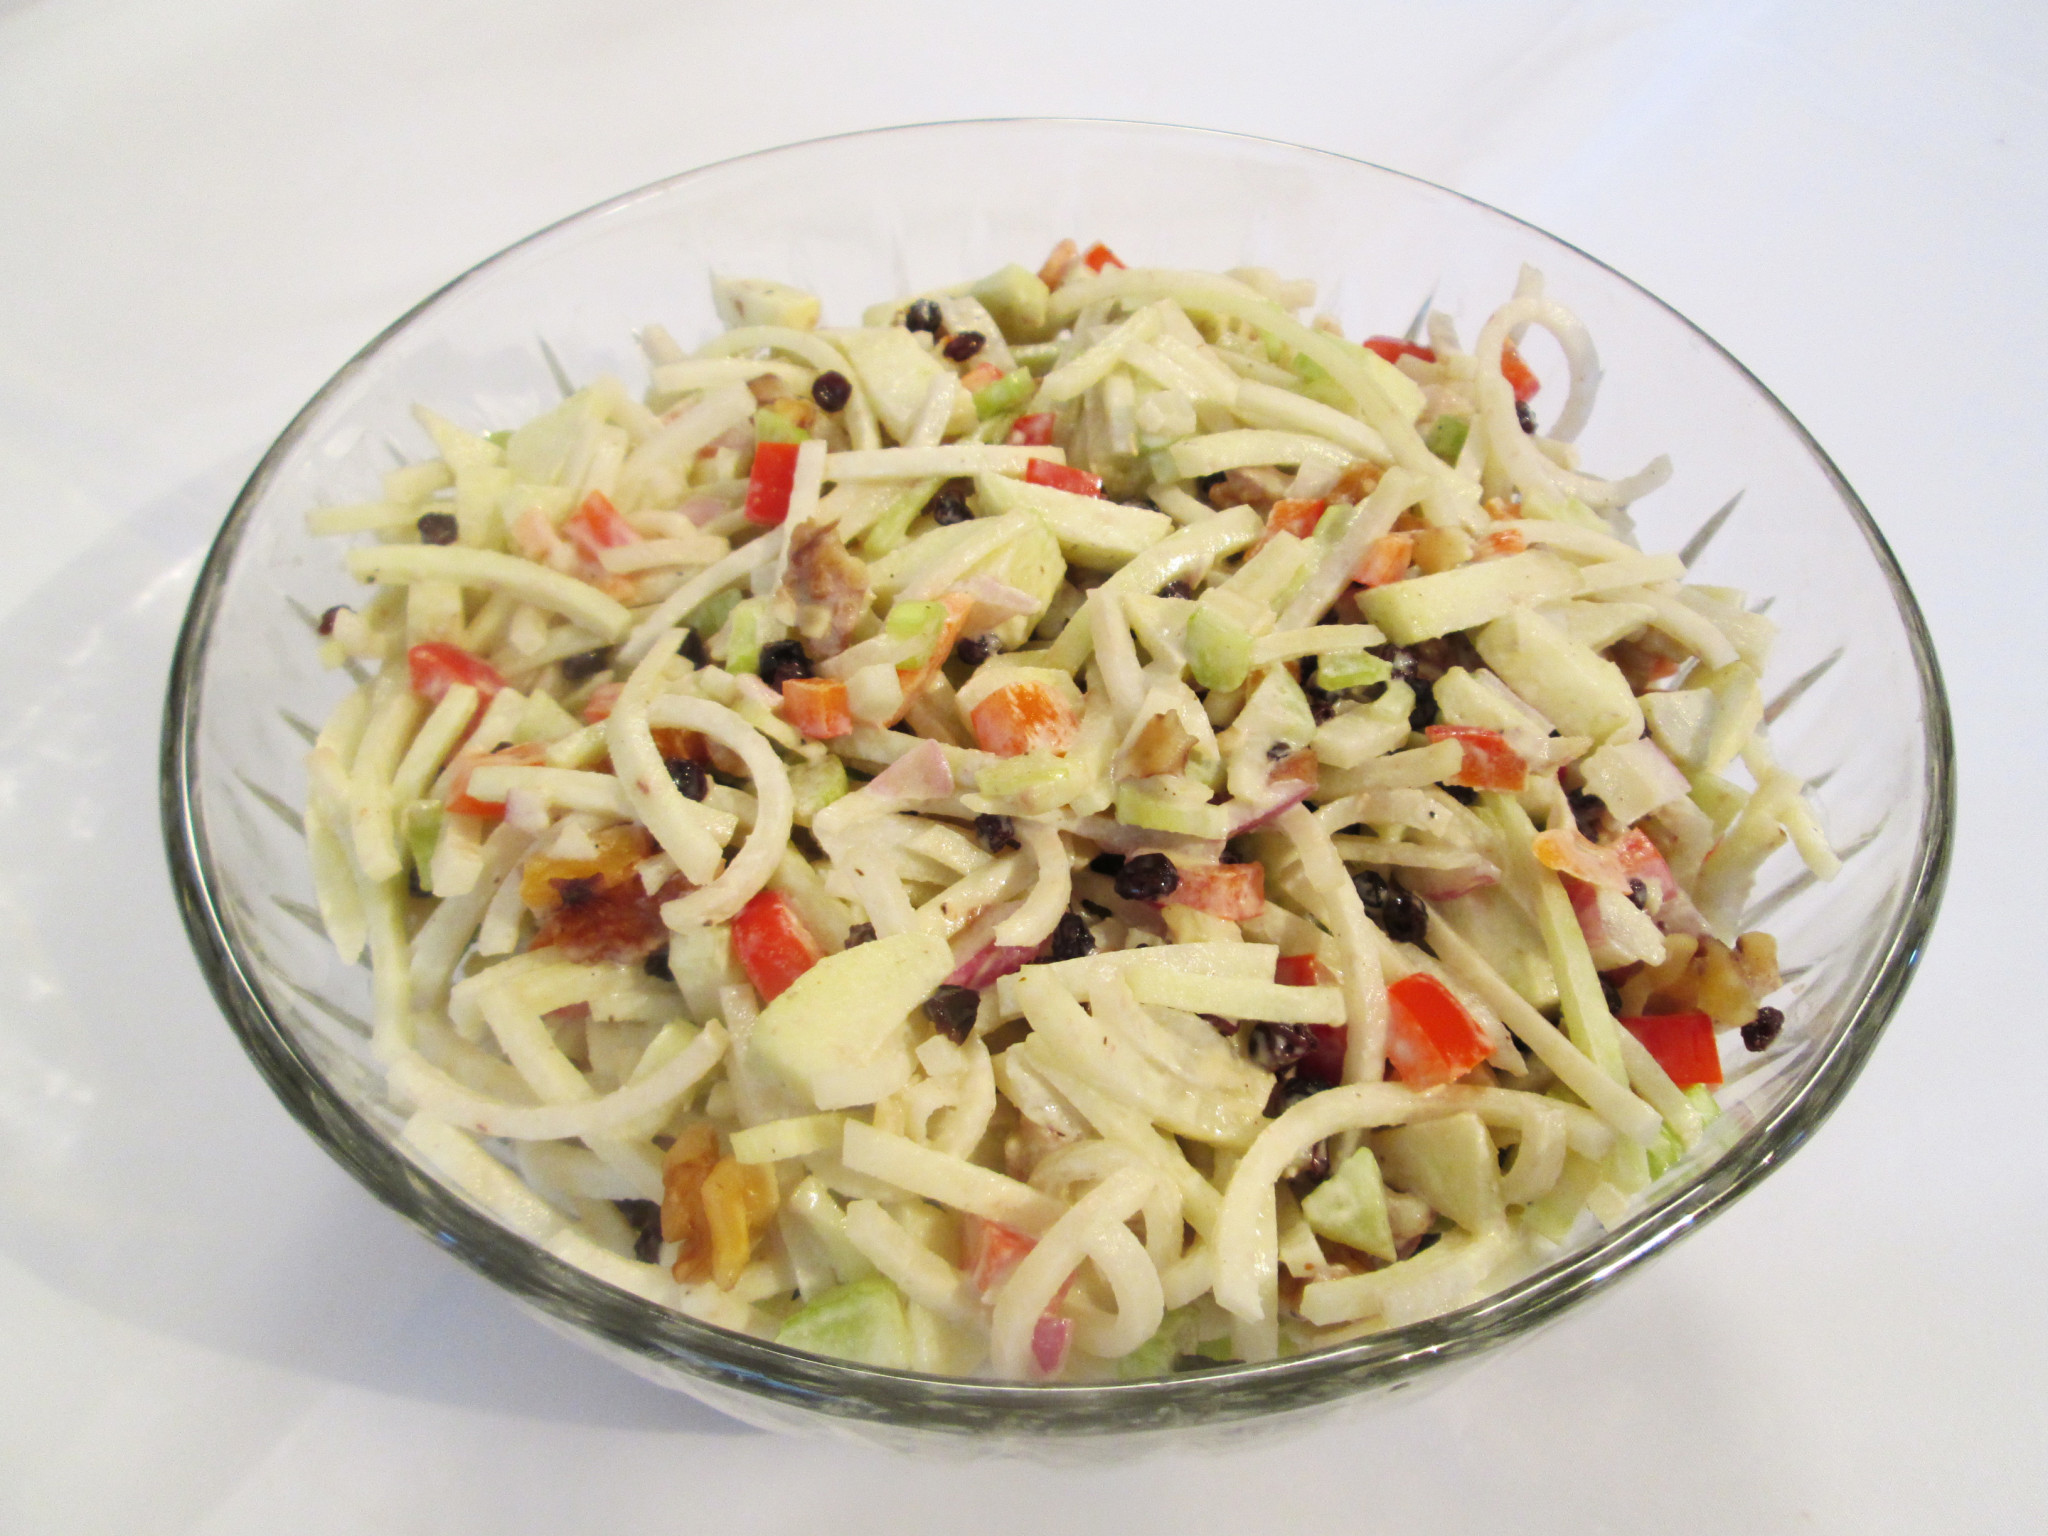 Creamy Kohlrabi Salad Recipe - Great using Broccoli Slaw as well